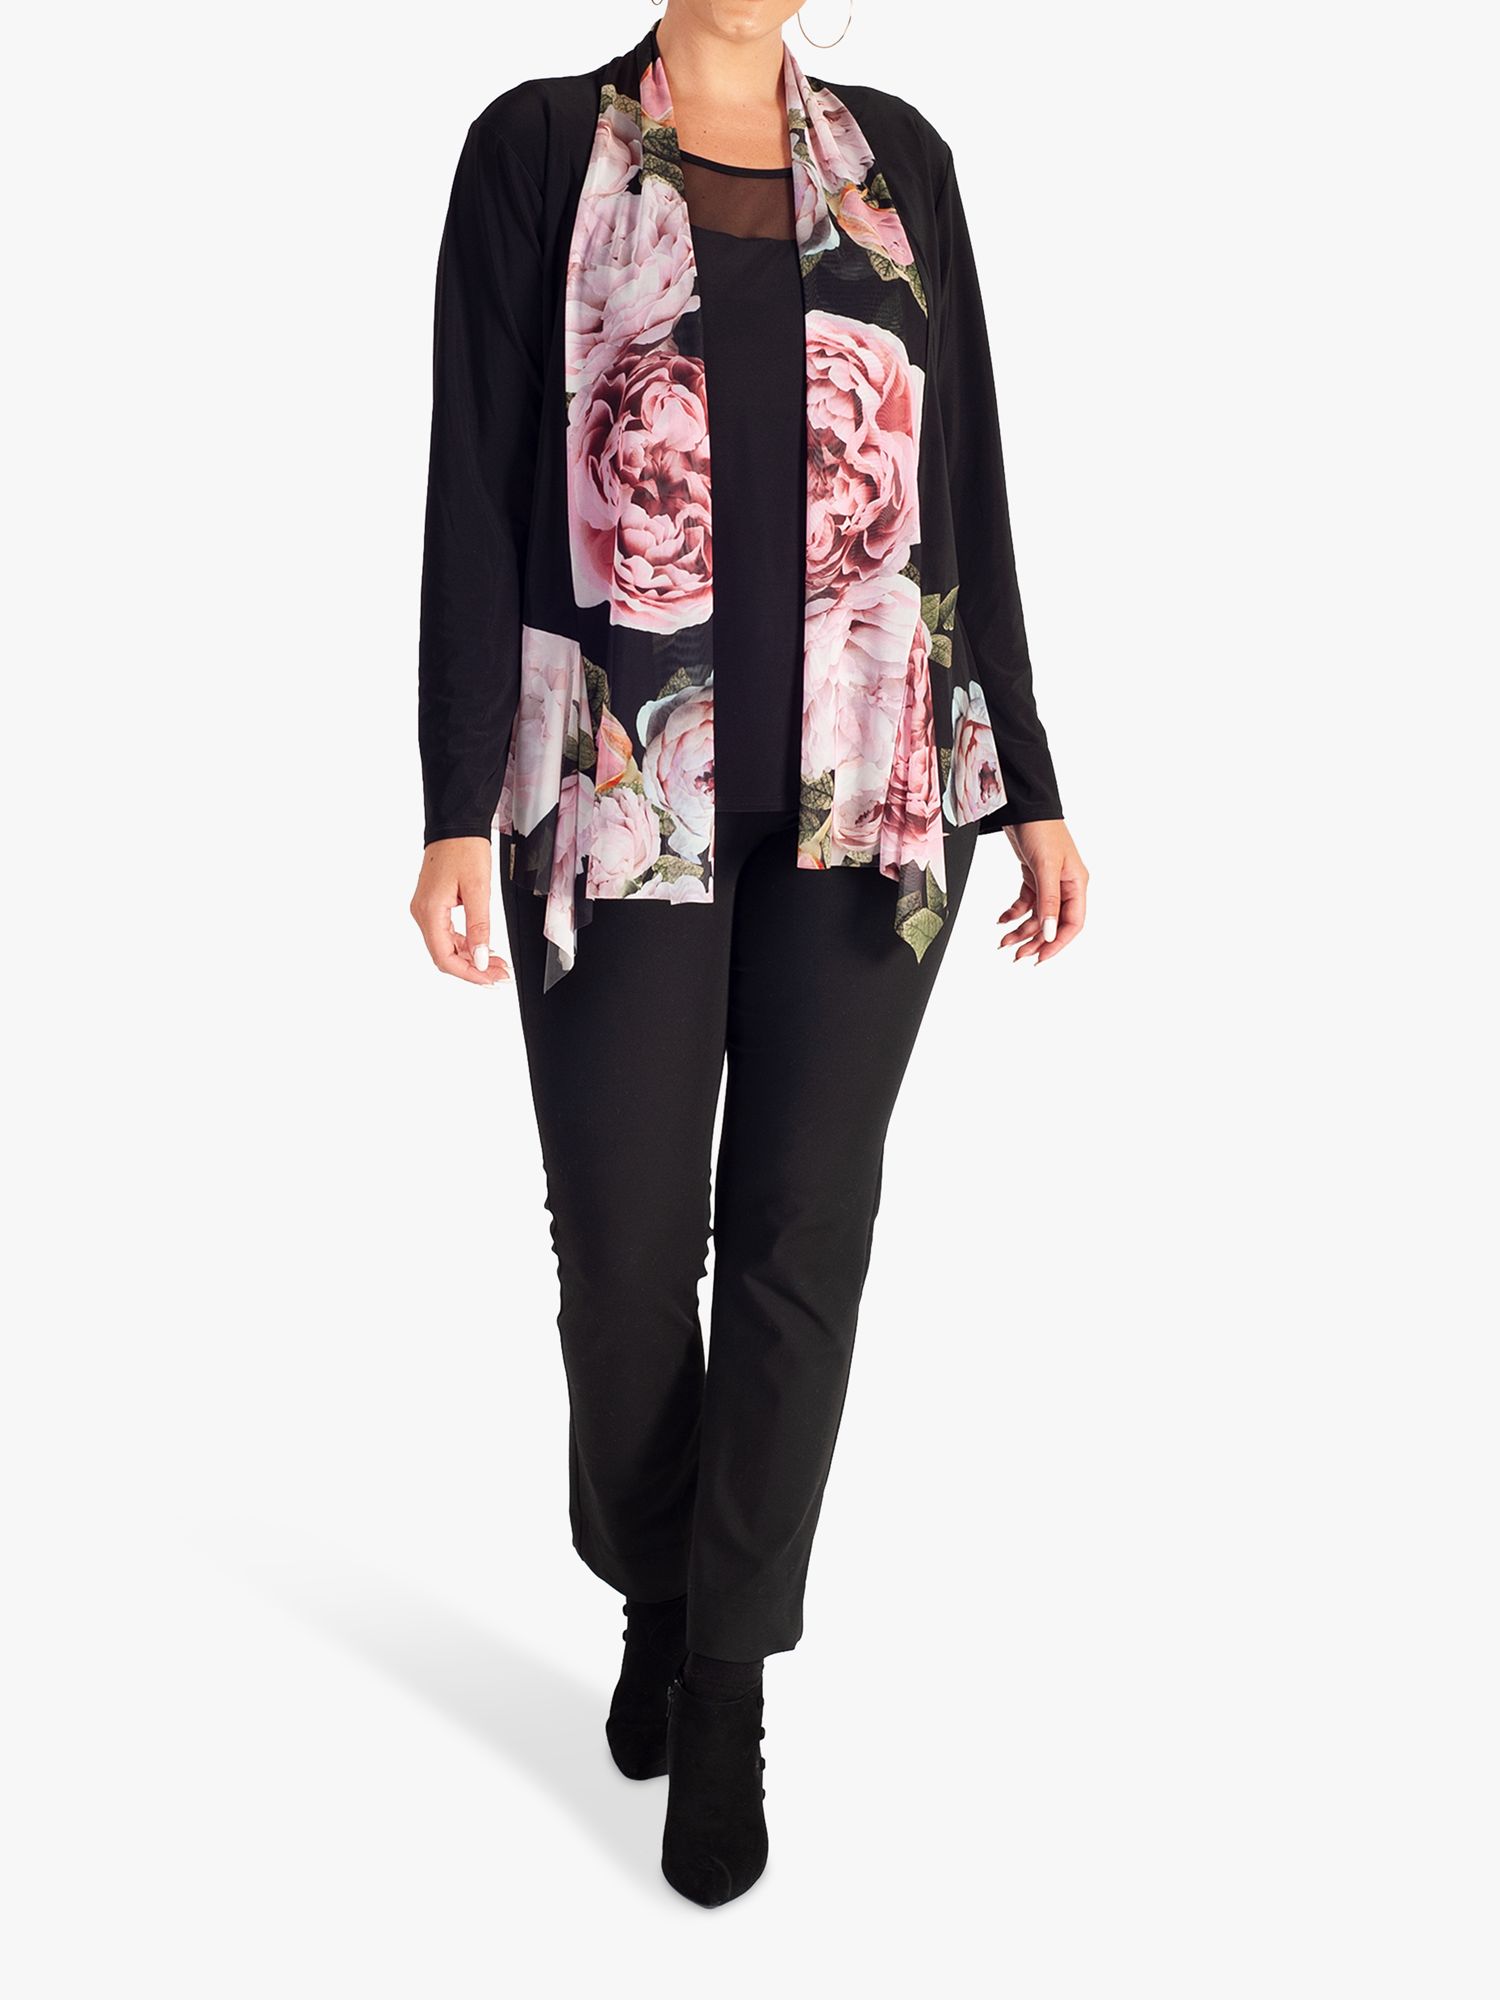 chesca Autumn Rose Jersey Shrug Jacket, Black at John Lewis & Partners